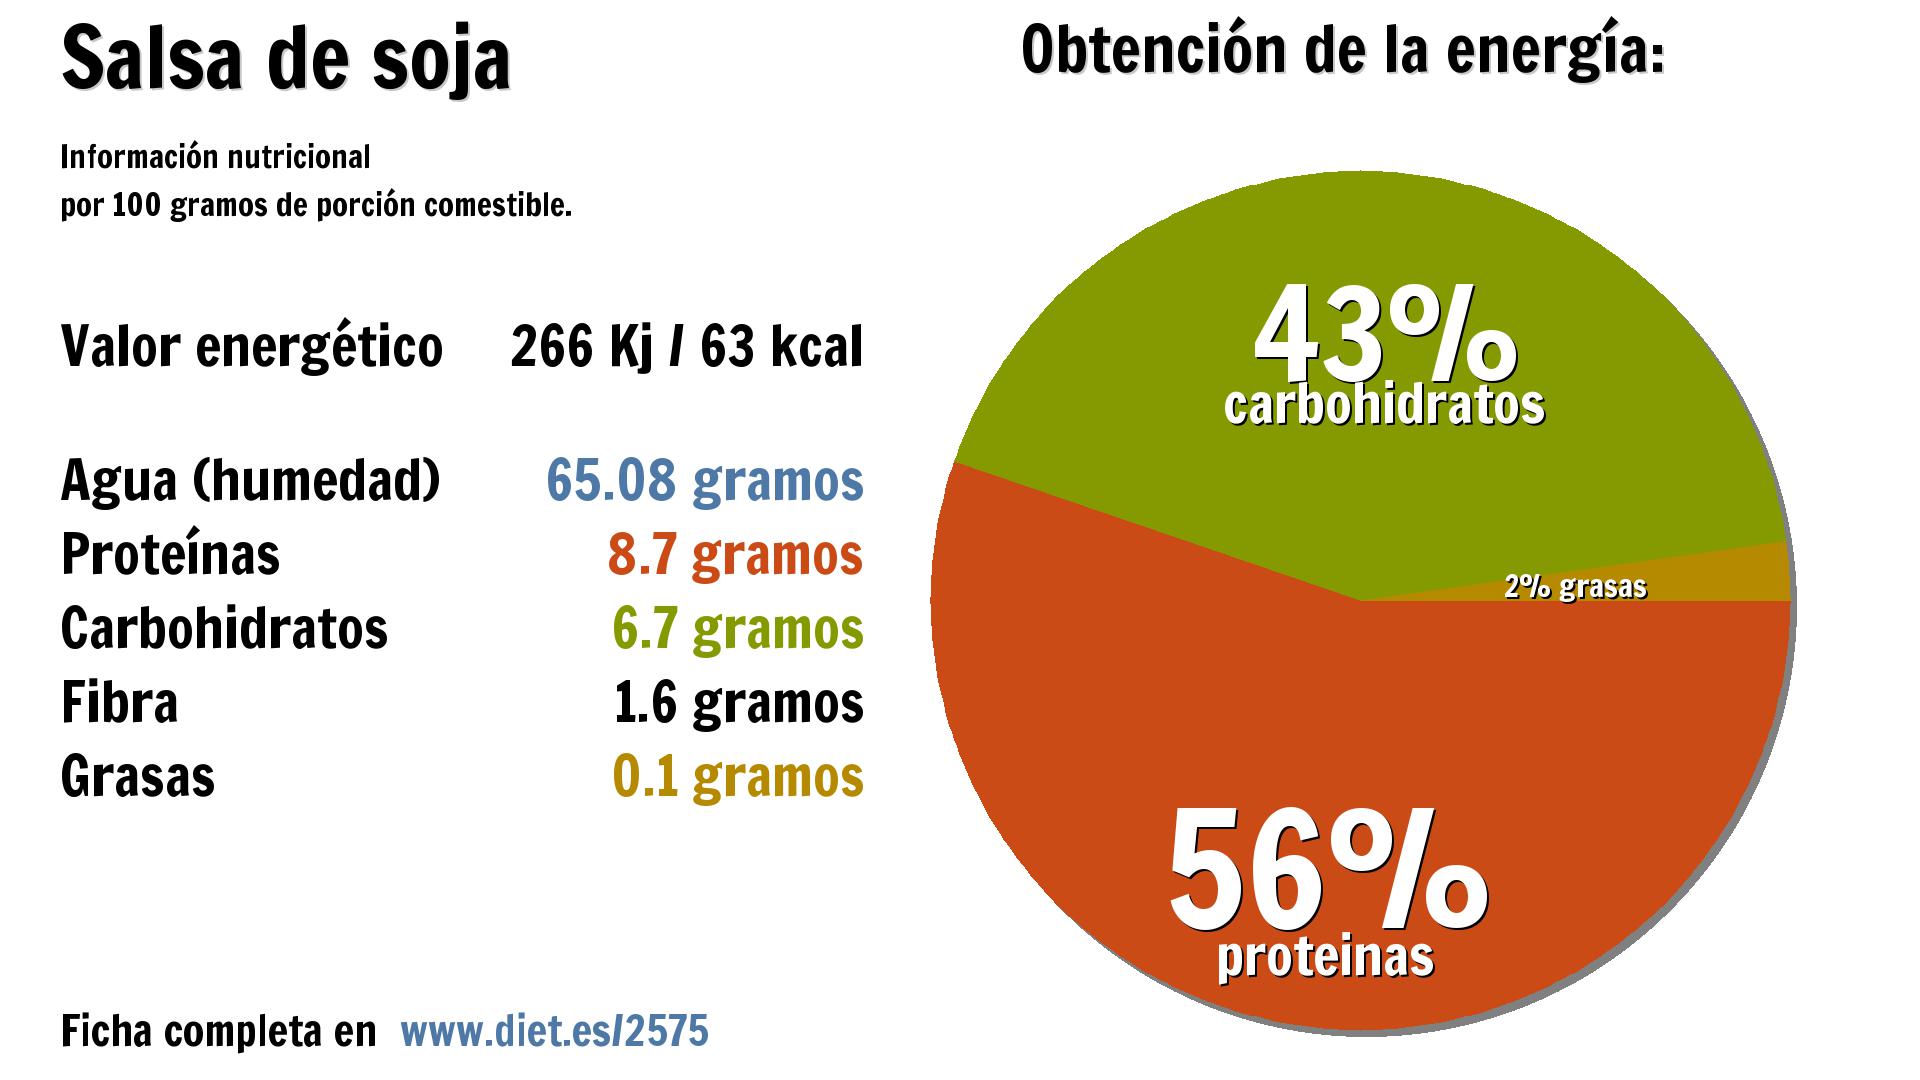 Salsa de soja: energía 266 Kj, agua 65 g., proteínas 9 g., carbohidratos 7 g. y fibra 2 g.